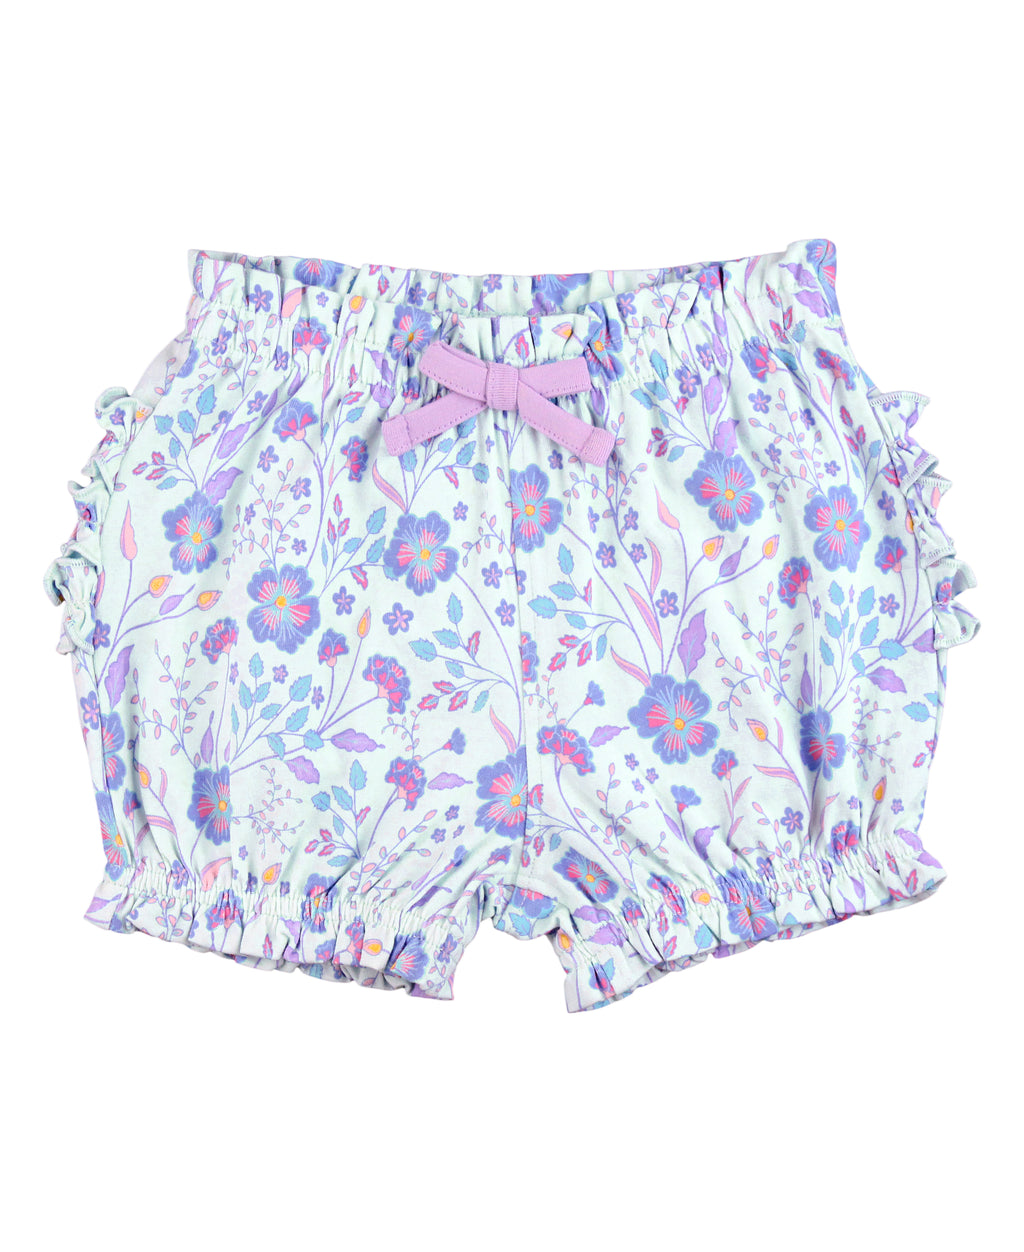 Bubble Knit Shorts - FAIRYTALE GARDEN